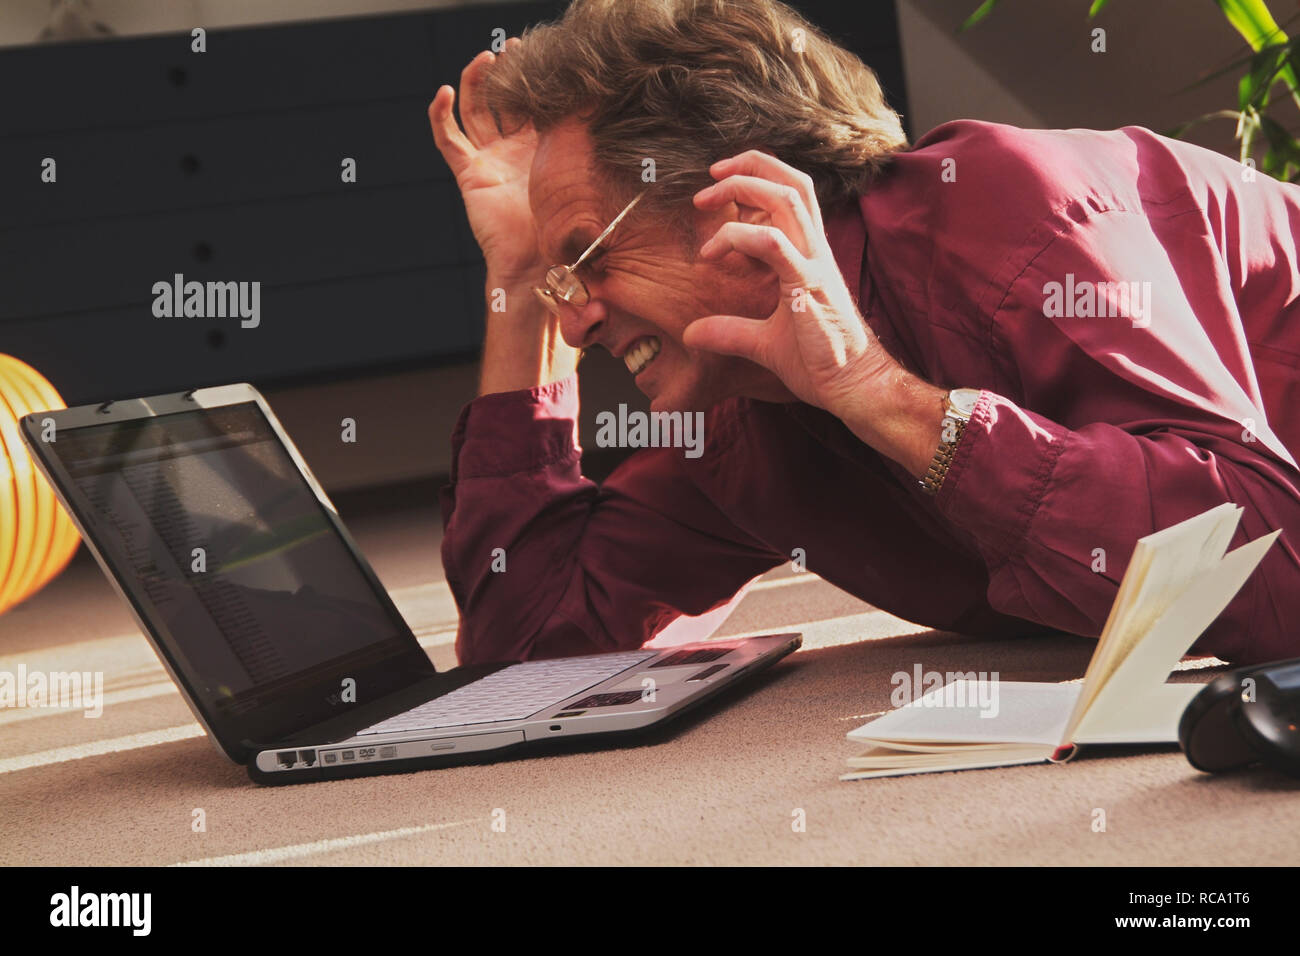 Mann mittleren Alters mit Notebook auf dem Boden liegend ärgert sich | stressed middleaged man is lying on the floor with a notebook Stock Photo